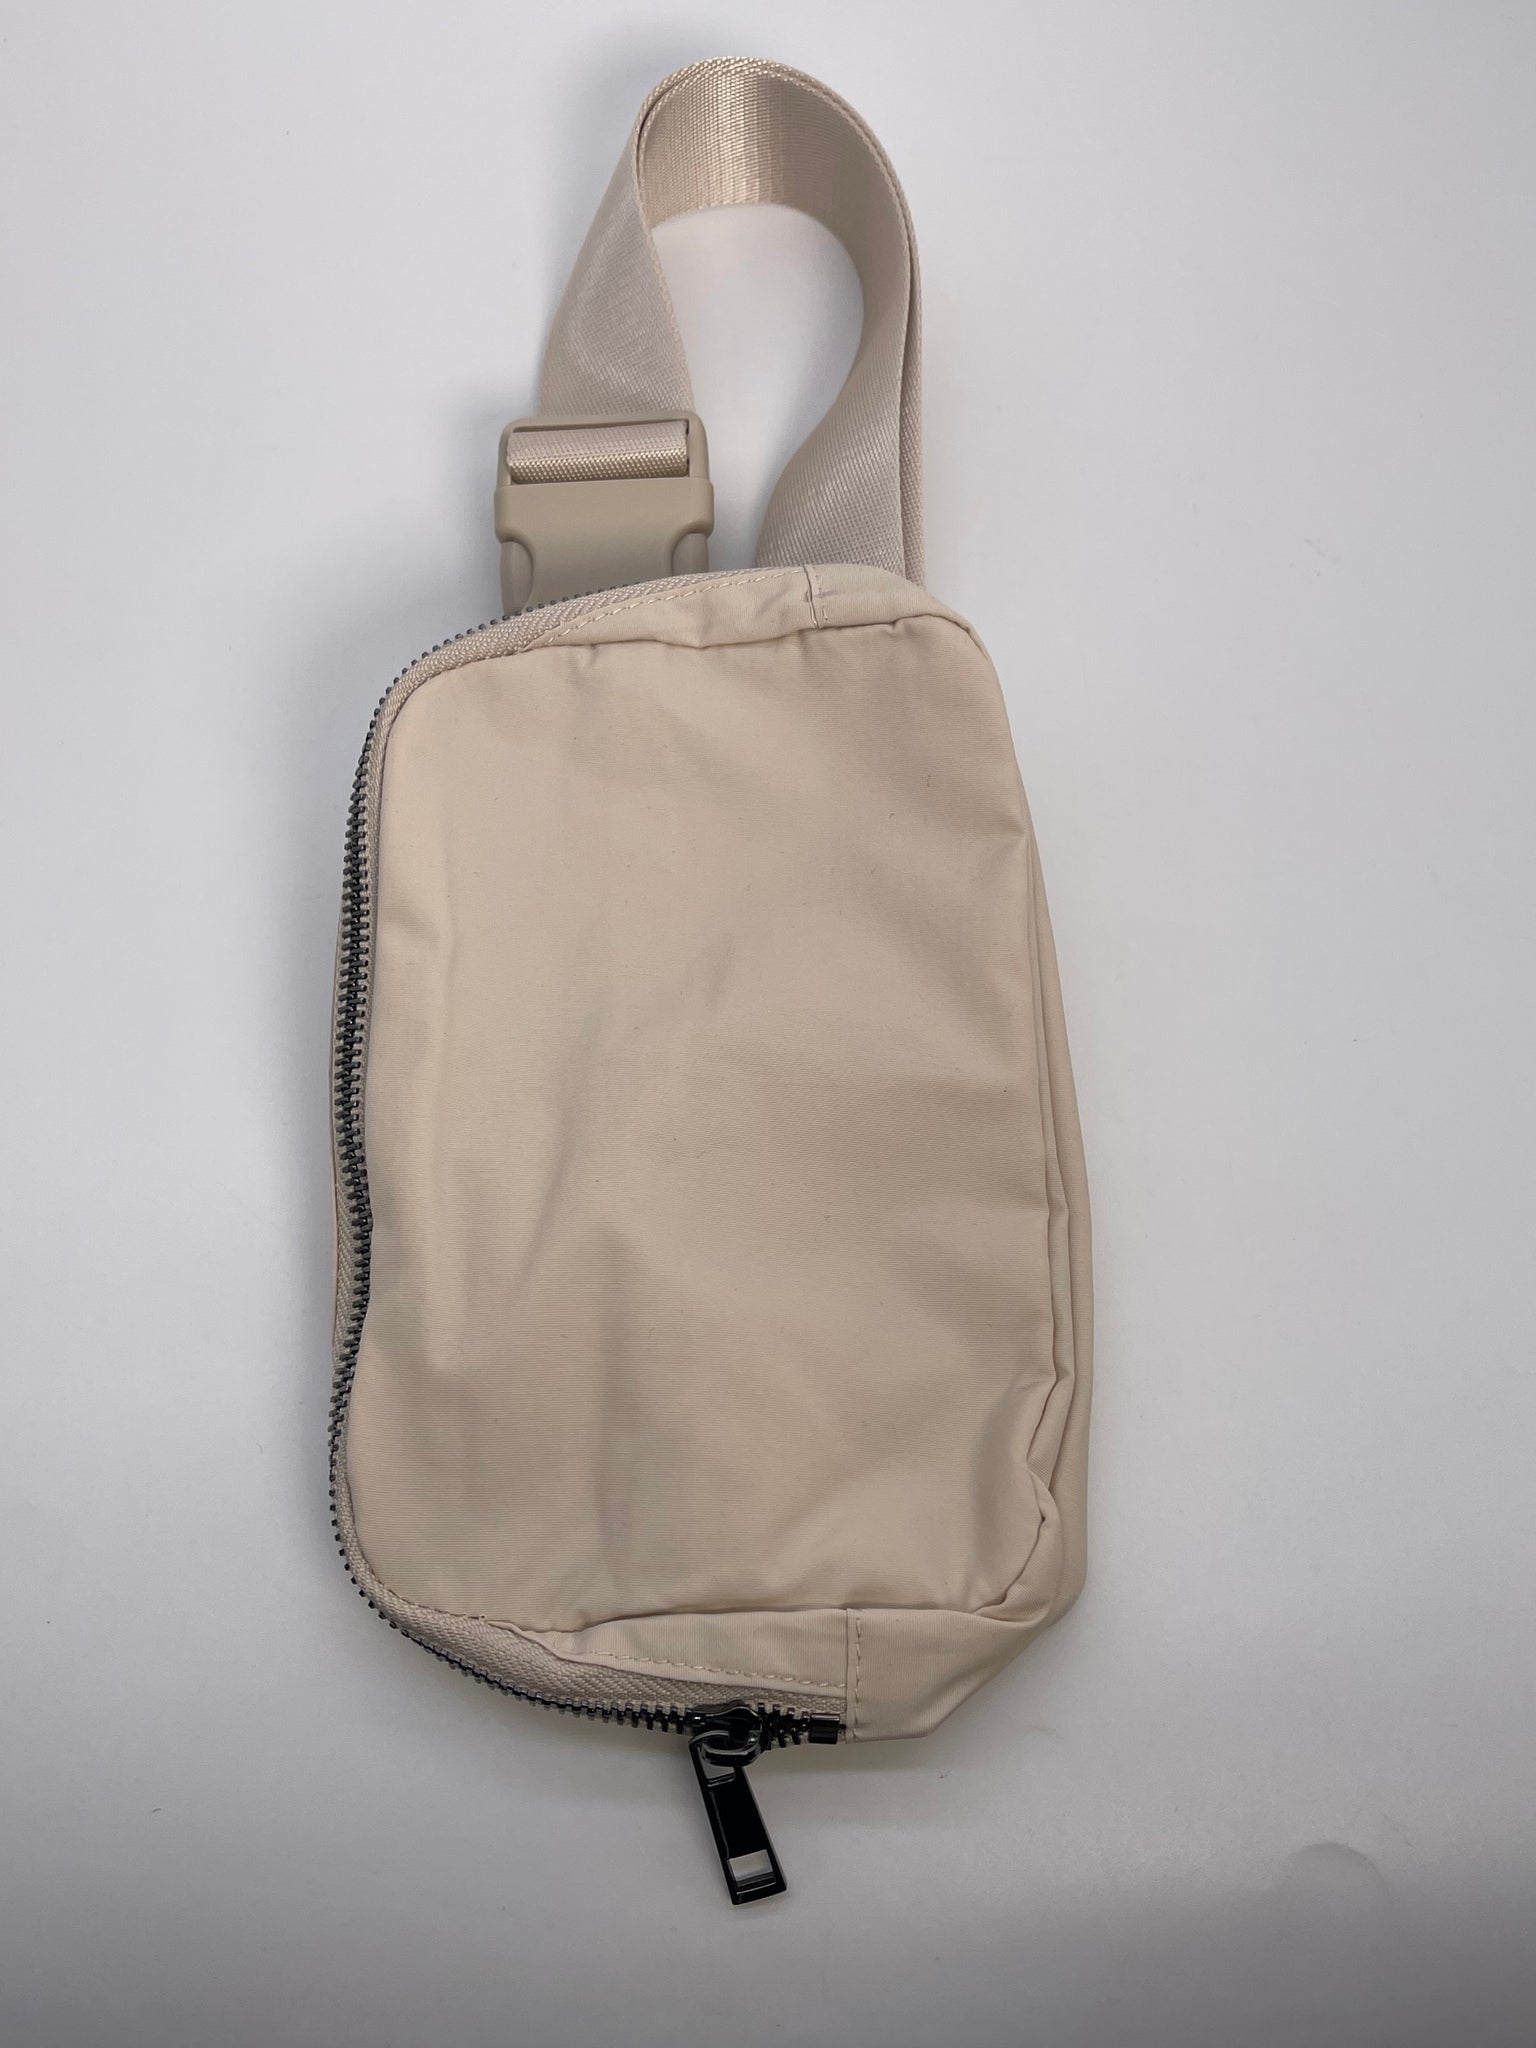 New Nylon Waterproof Waist Bag / Bumbag - SALE $10 090623